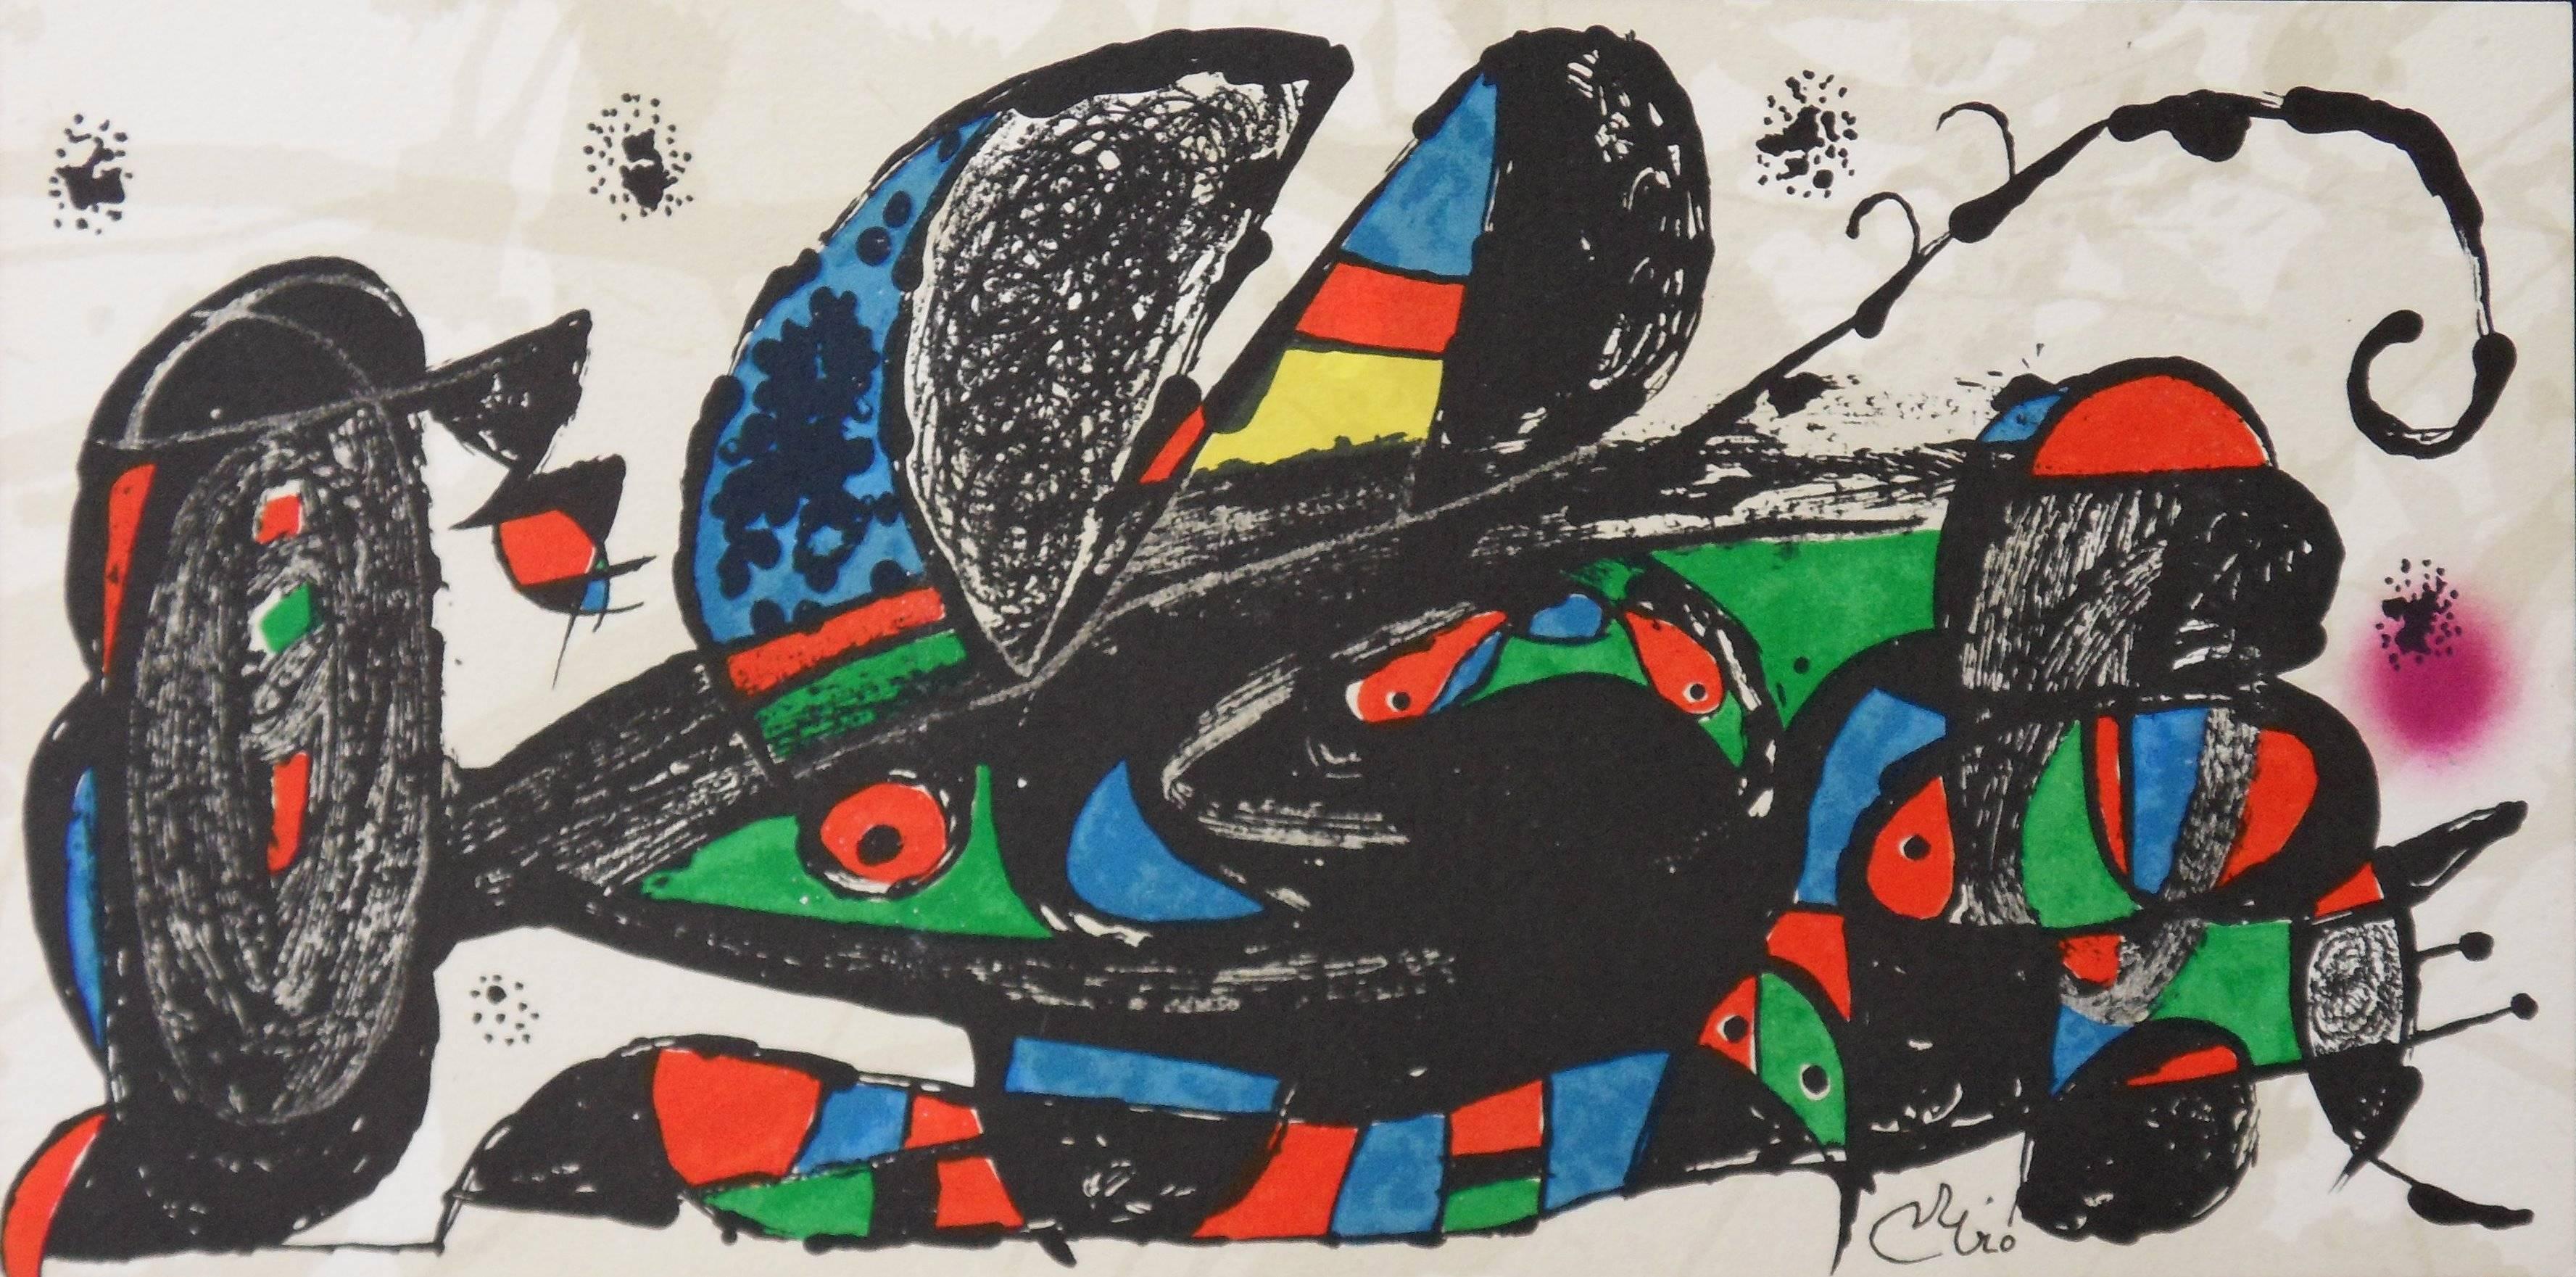 Joan Miró Abstract Print - Escultor : Persia - Original lithograph - 1974